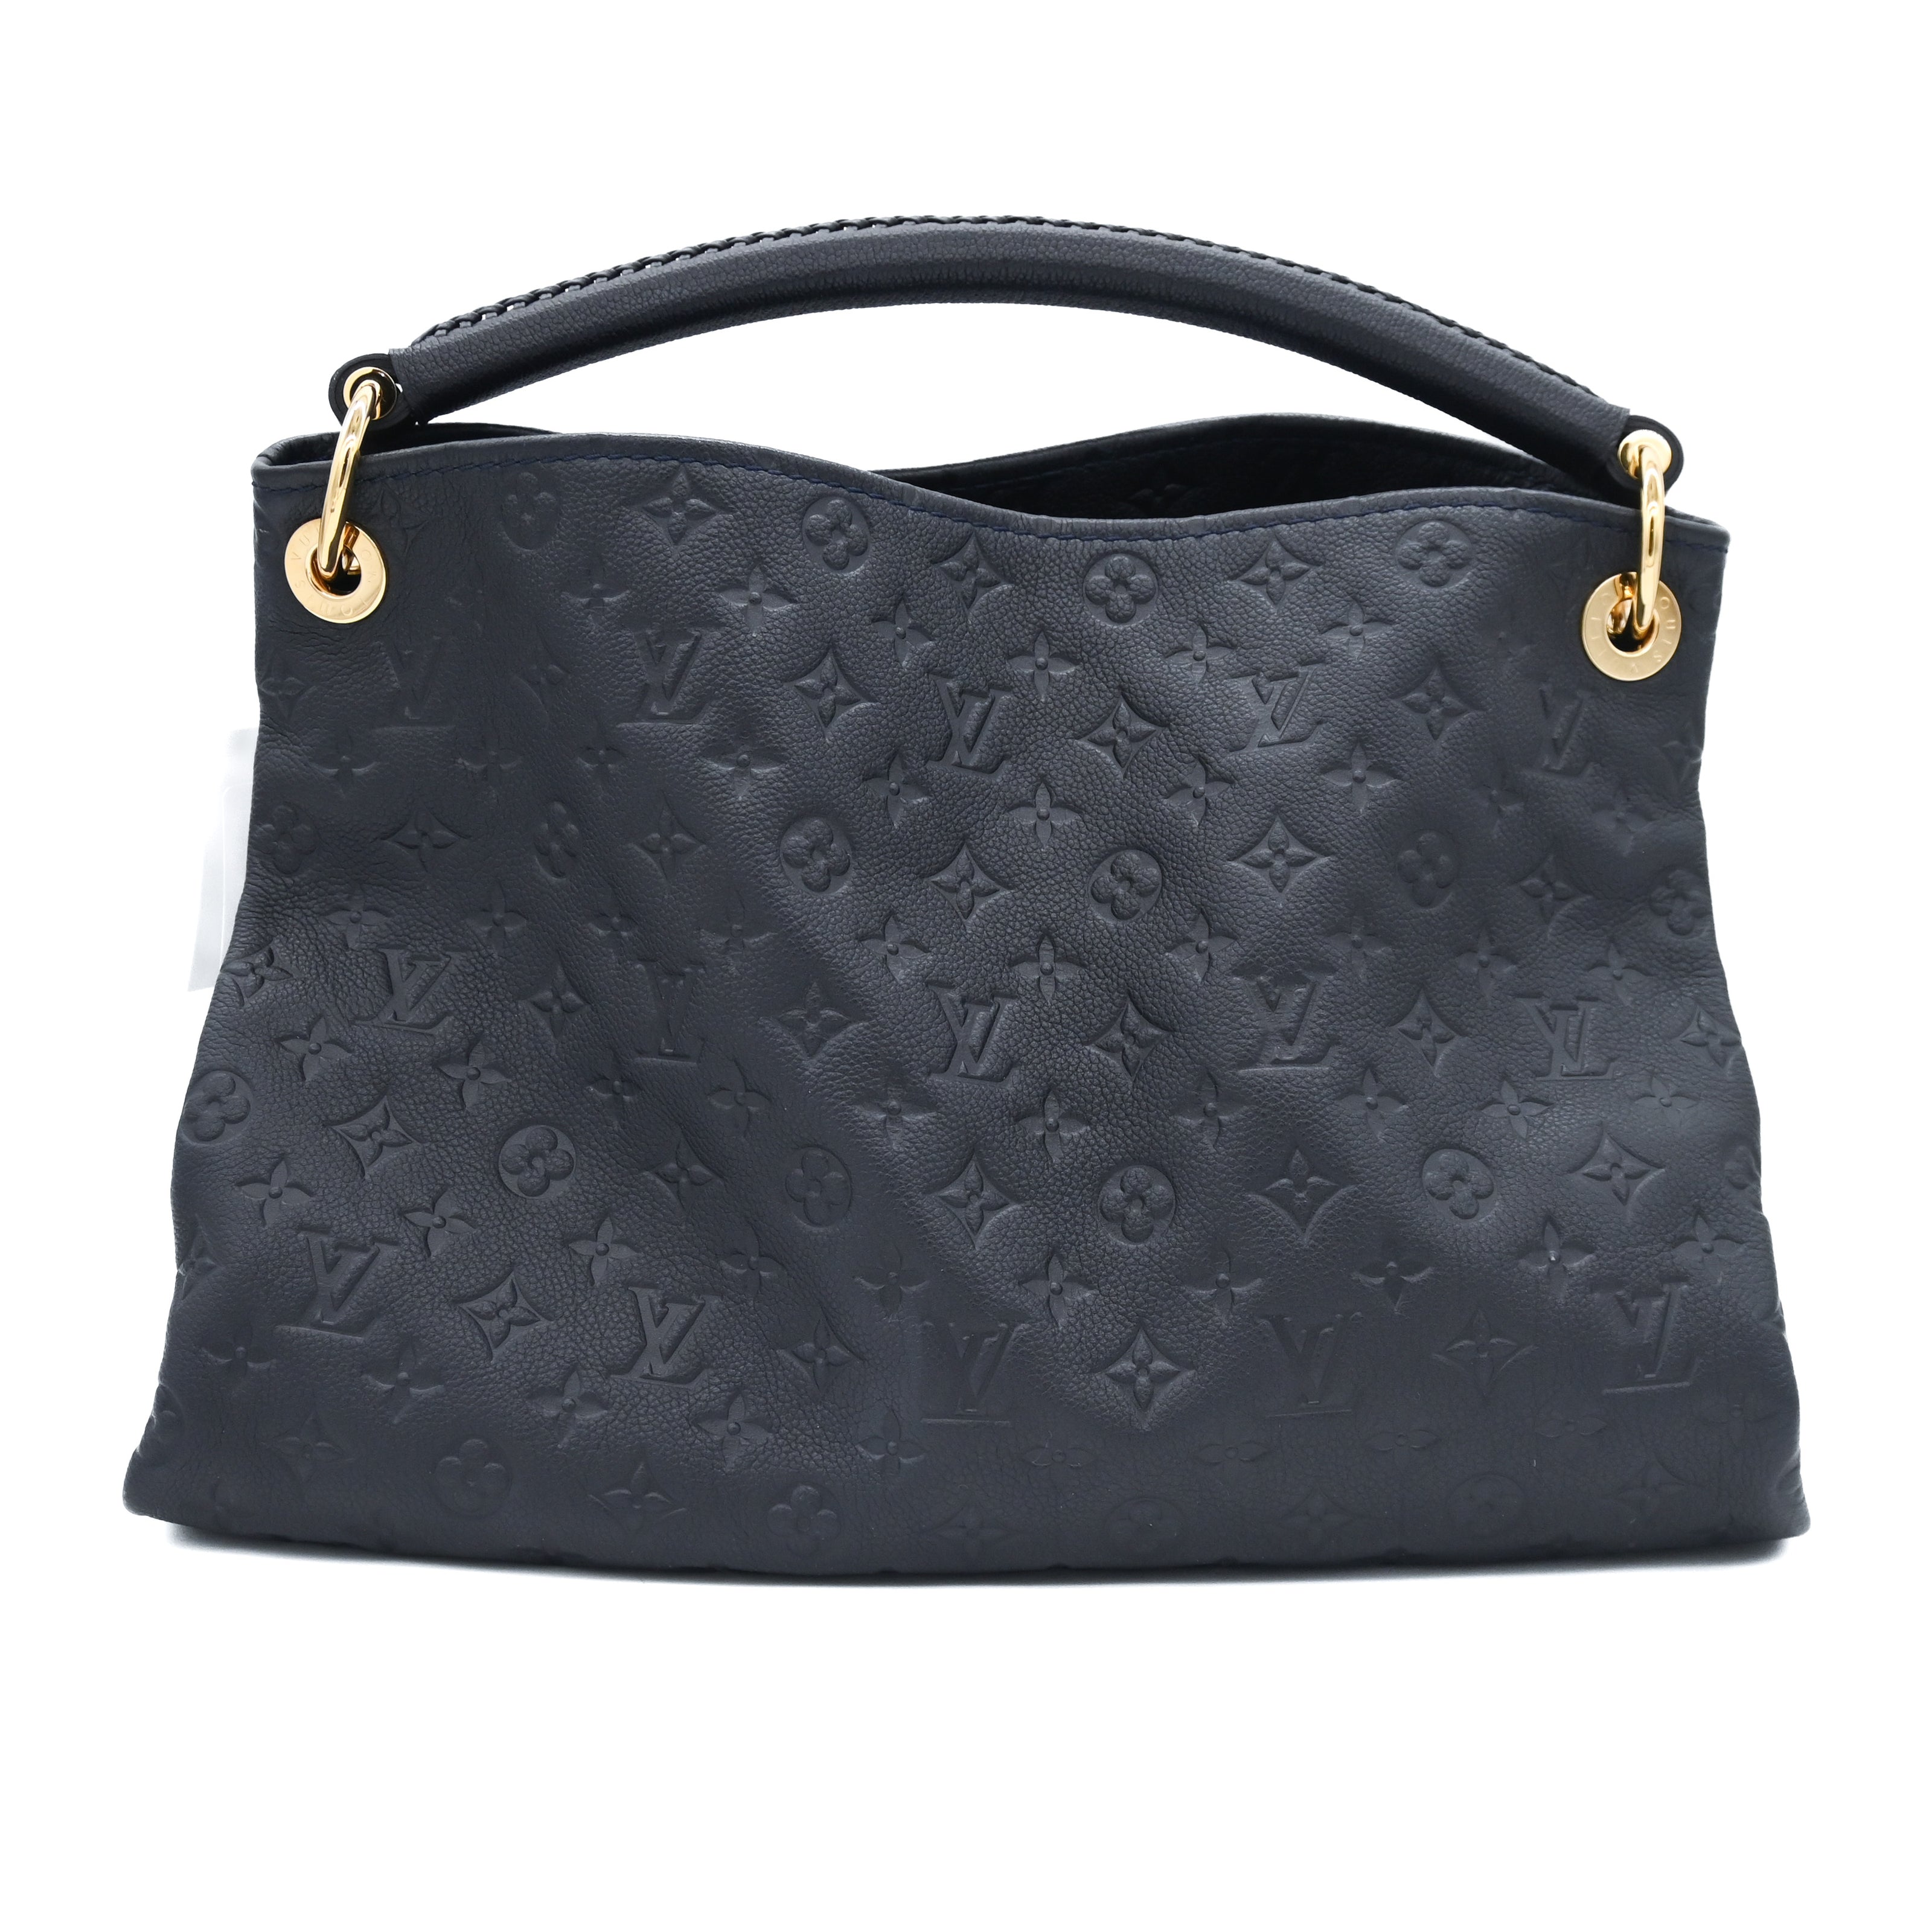 A new bag love : Louis Vuitton Empreinte Artsy MM - My Women Stuff